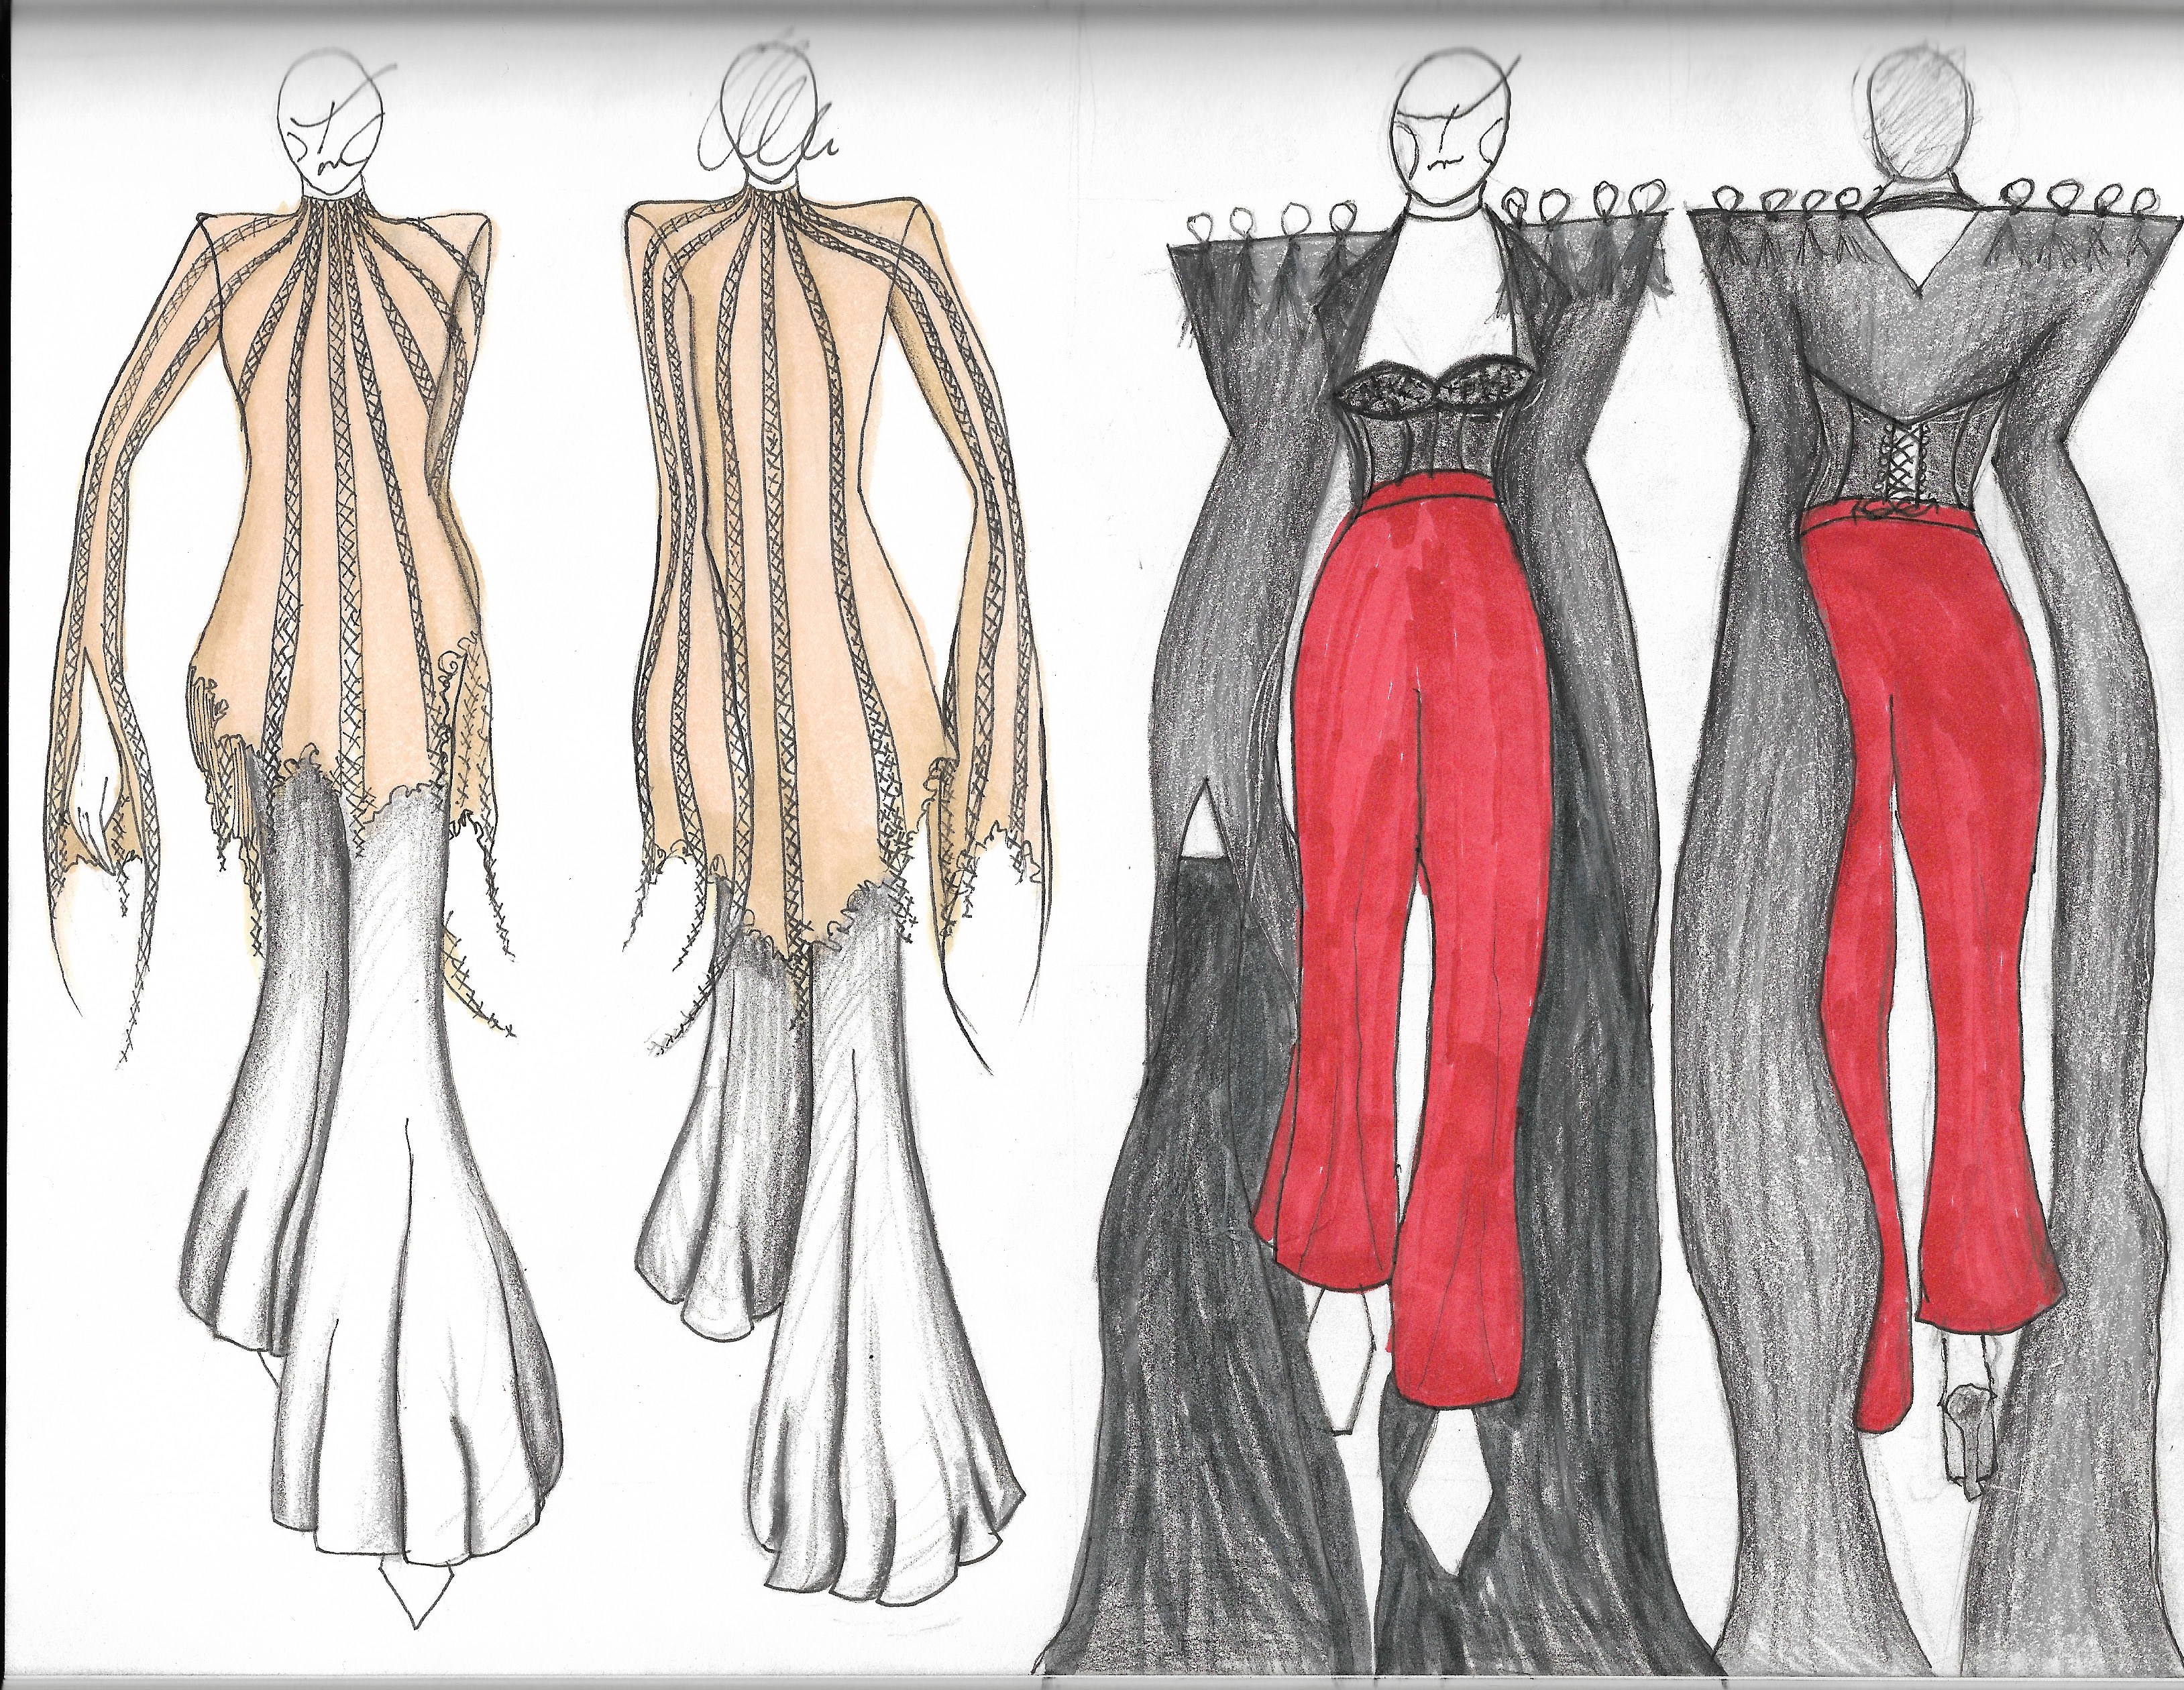 Studio Fashion: Creating a garment based off John Sex and Richard Hell